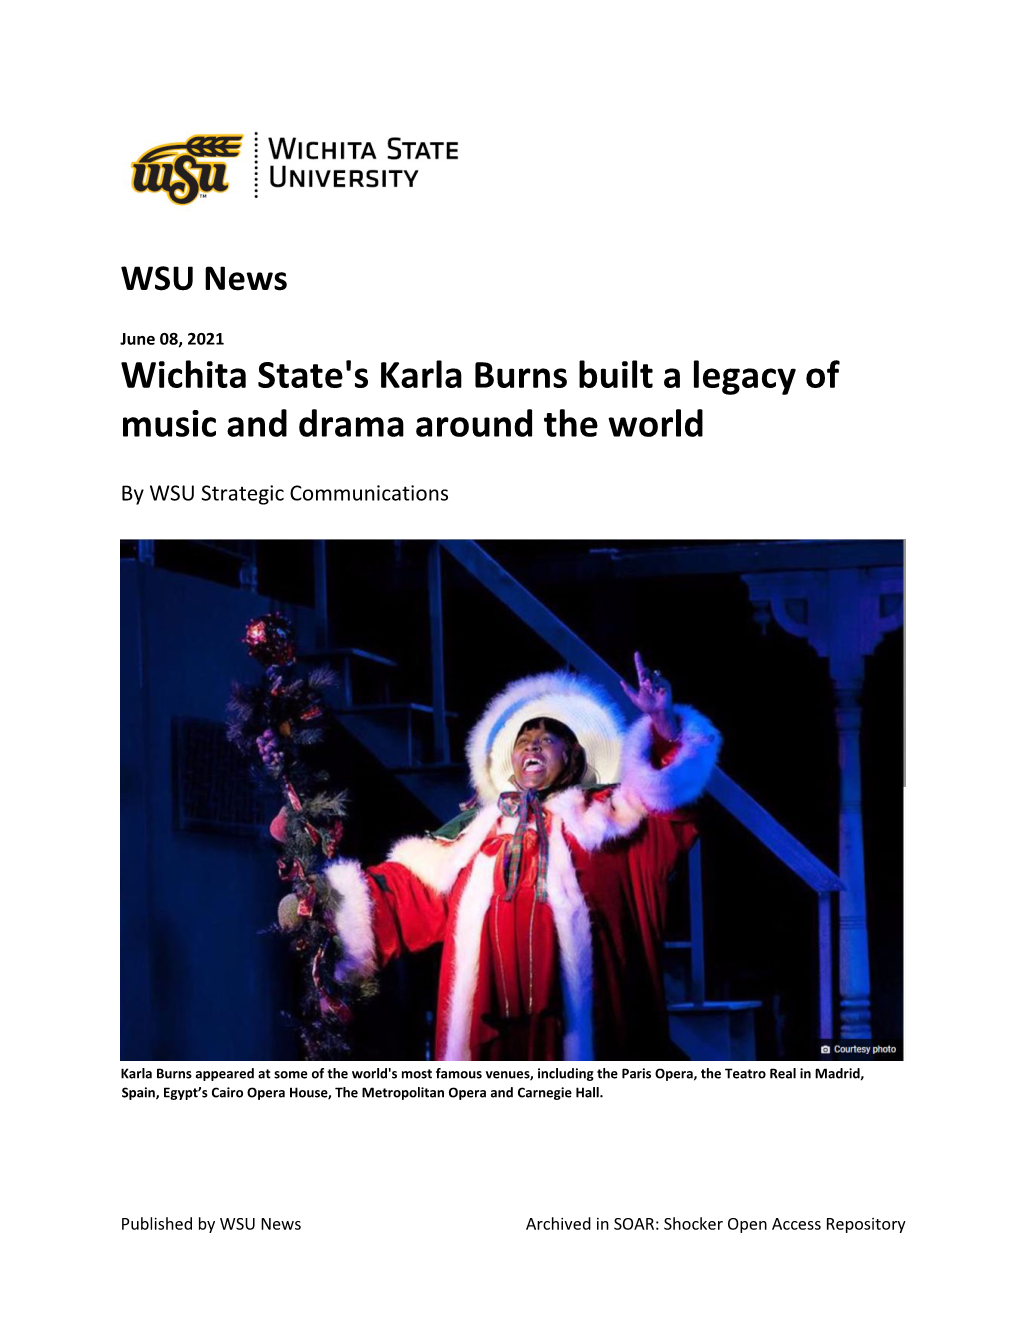 Wichita State's Karla Burns Built a Legacy of Music and Drama Around the World